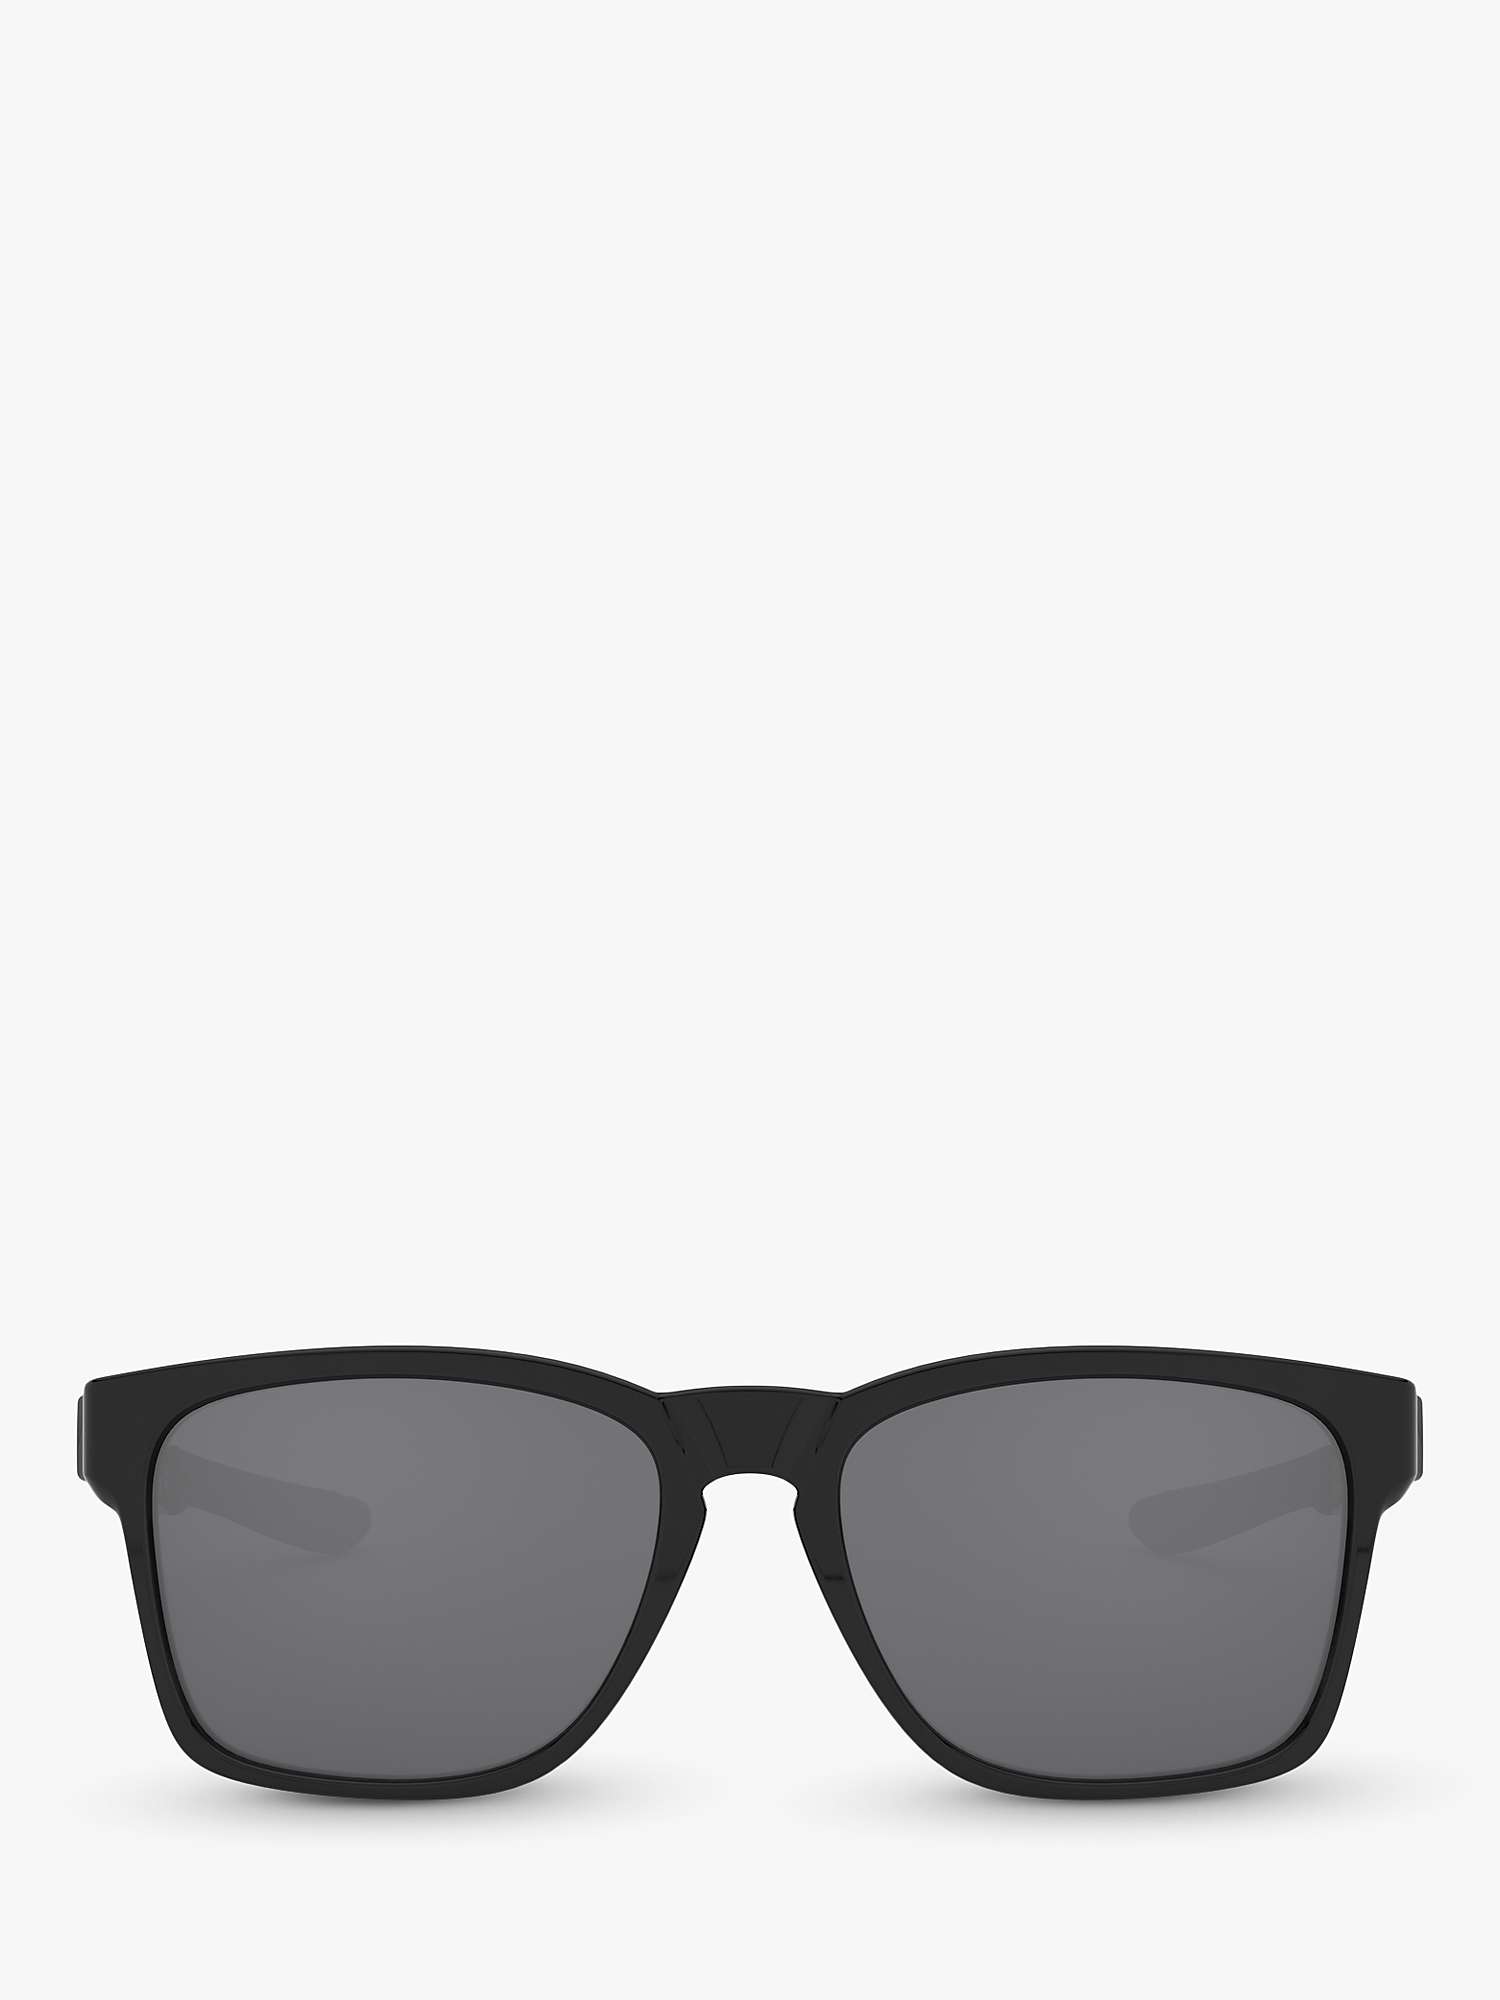 Buy Oakley OO9272 Men's Catalyst Rectangular Sunglasses, Polished Black/Grey Online at johnlewis.com